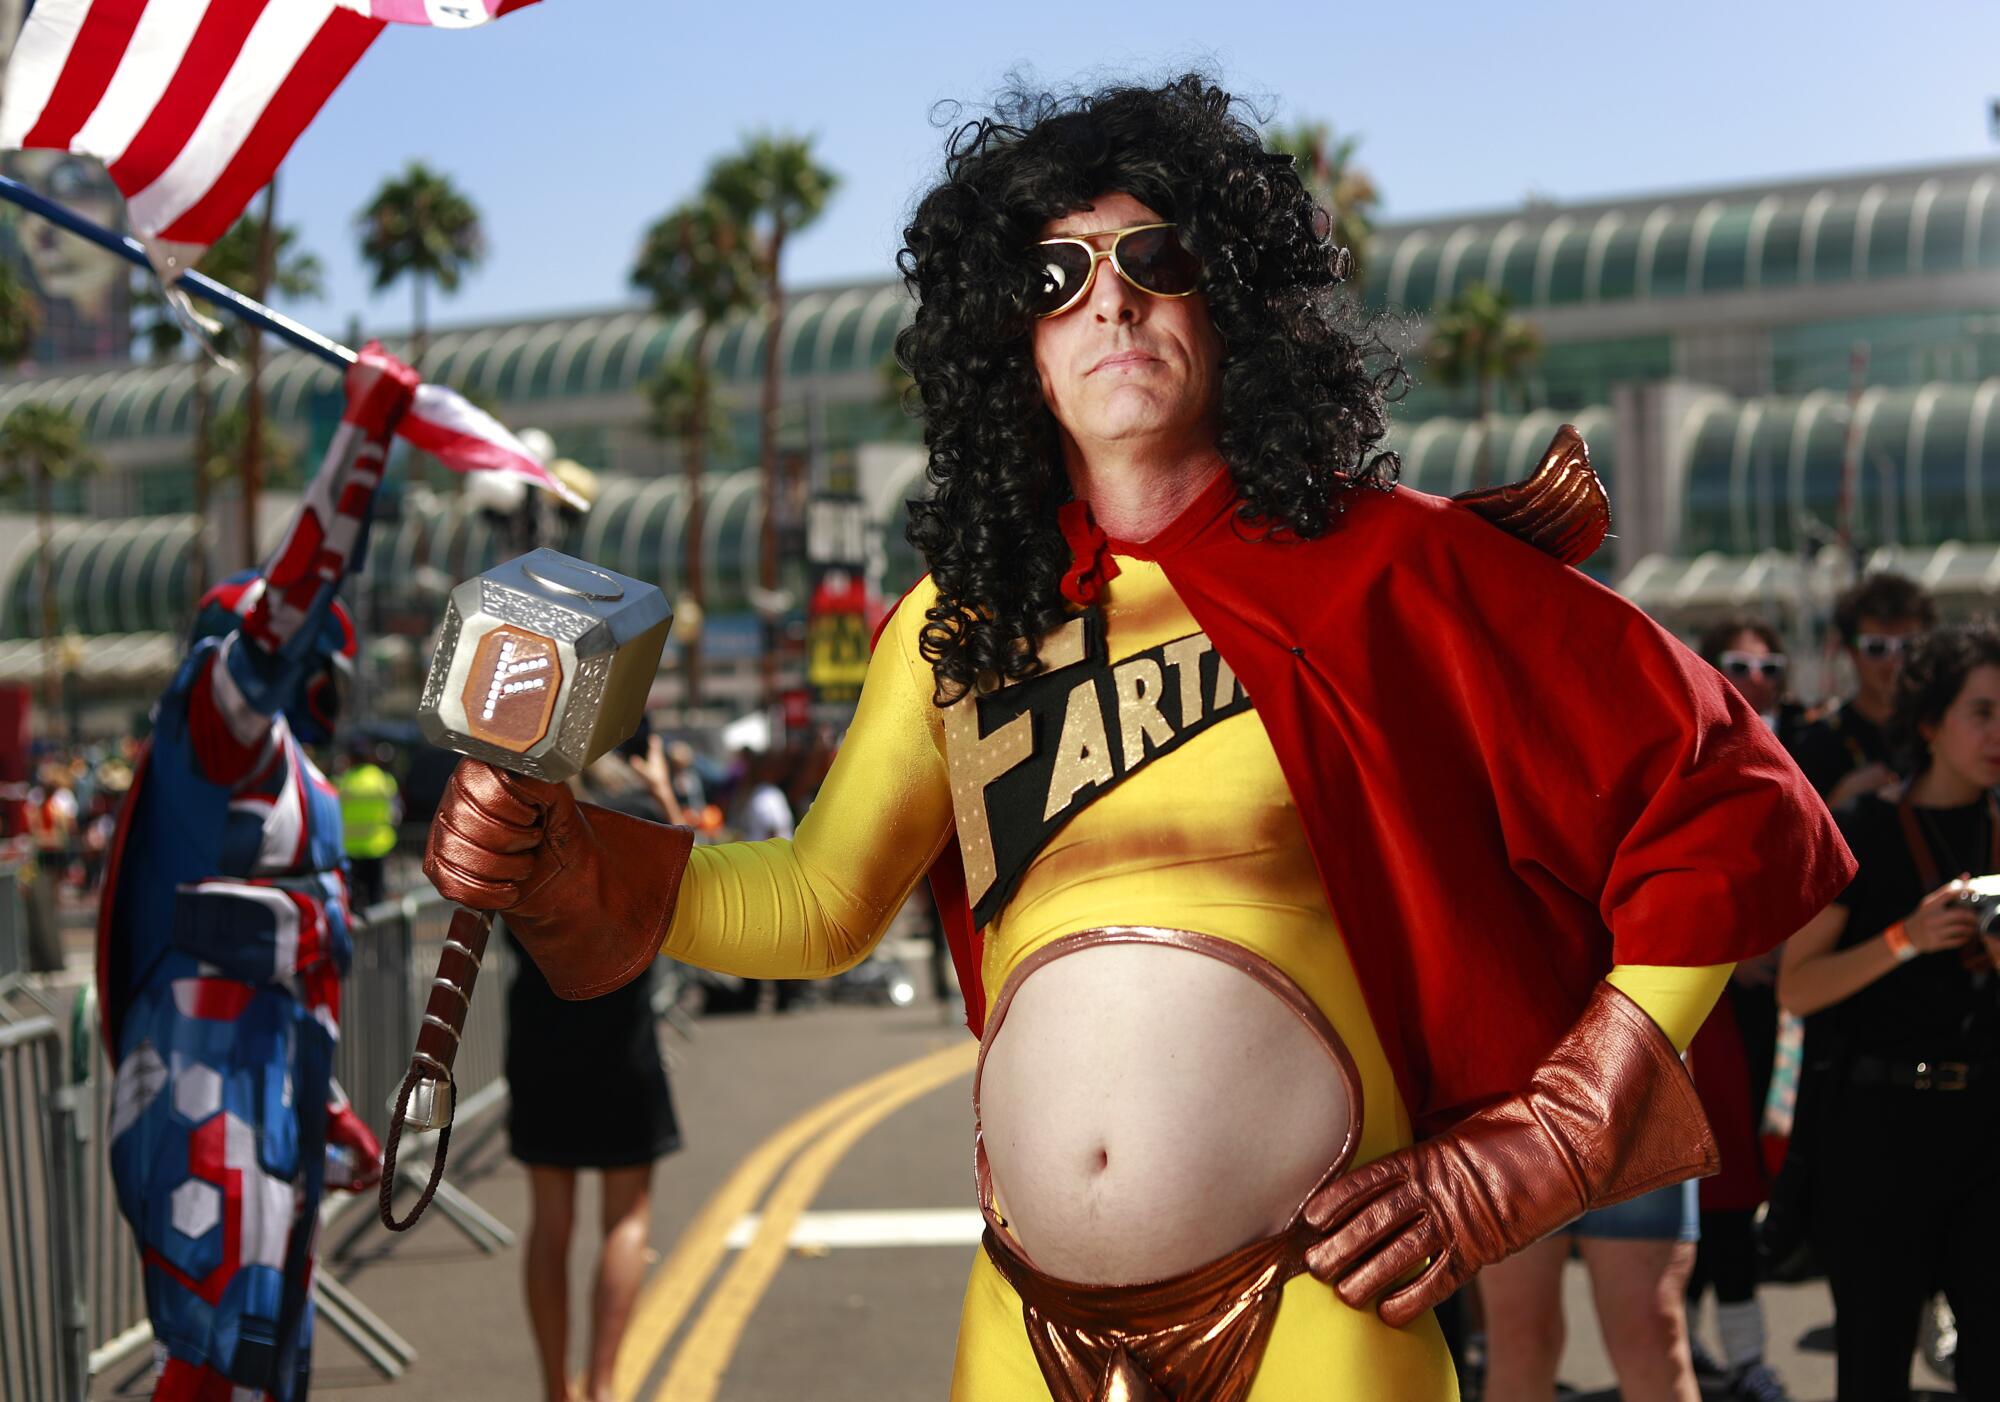 Clark Scheff of Seattle dressed as Fartman at Comic-Con in San Diego.